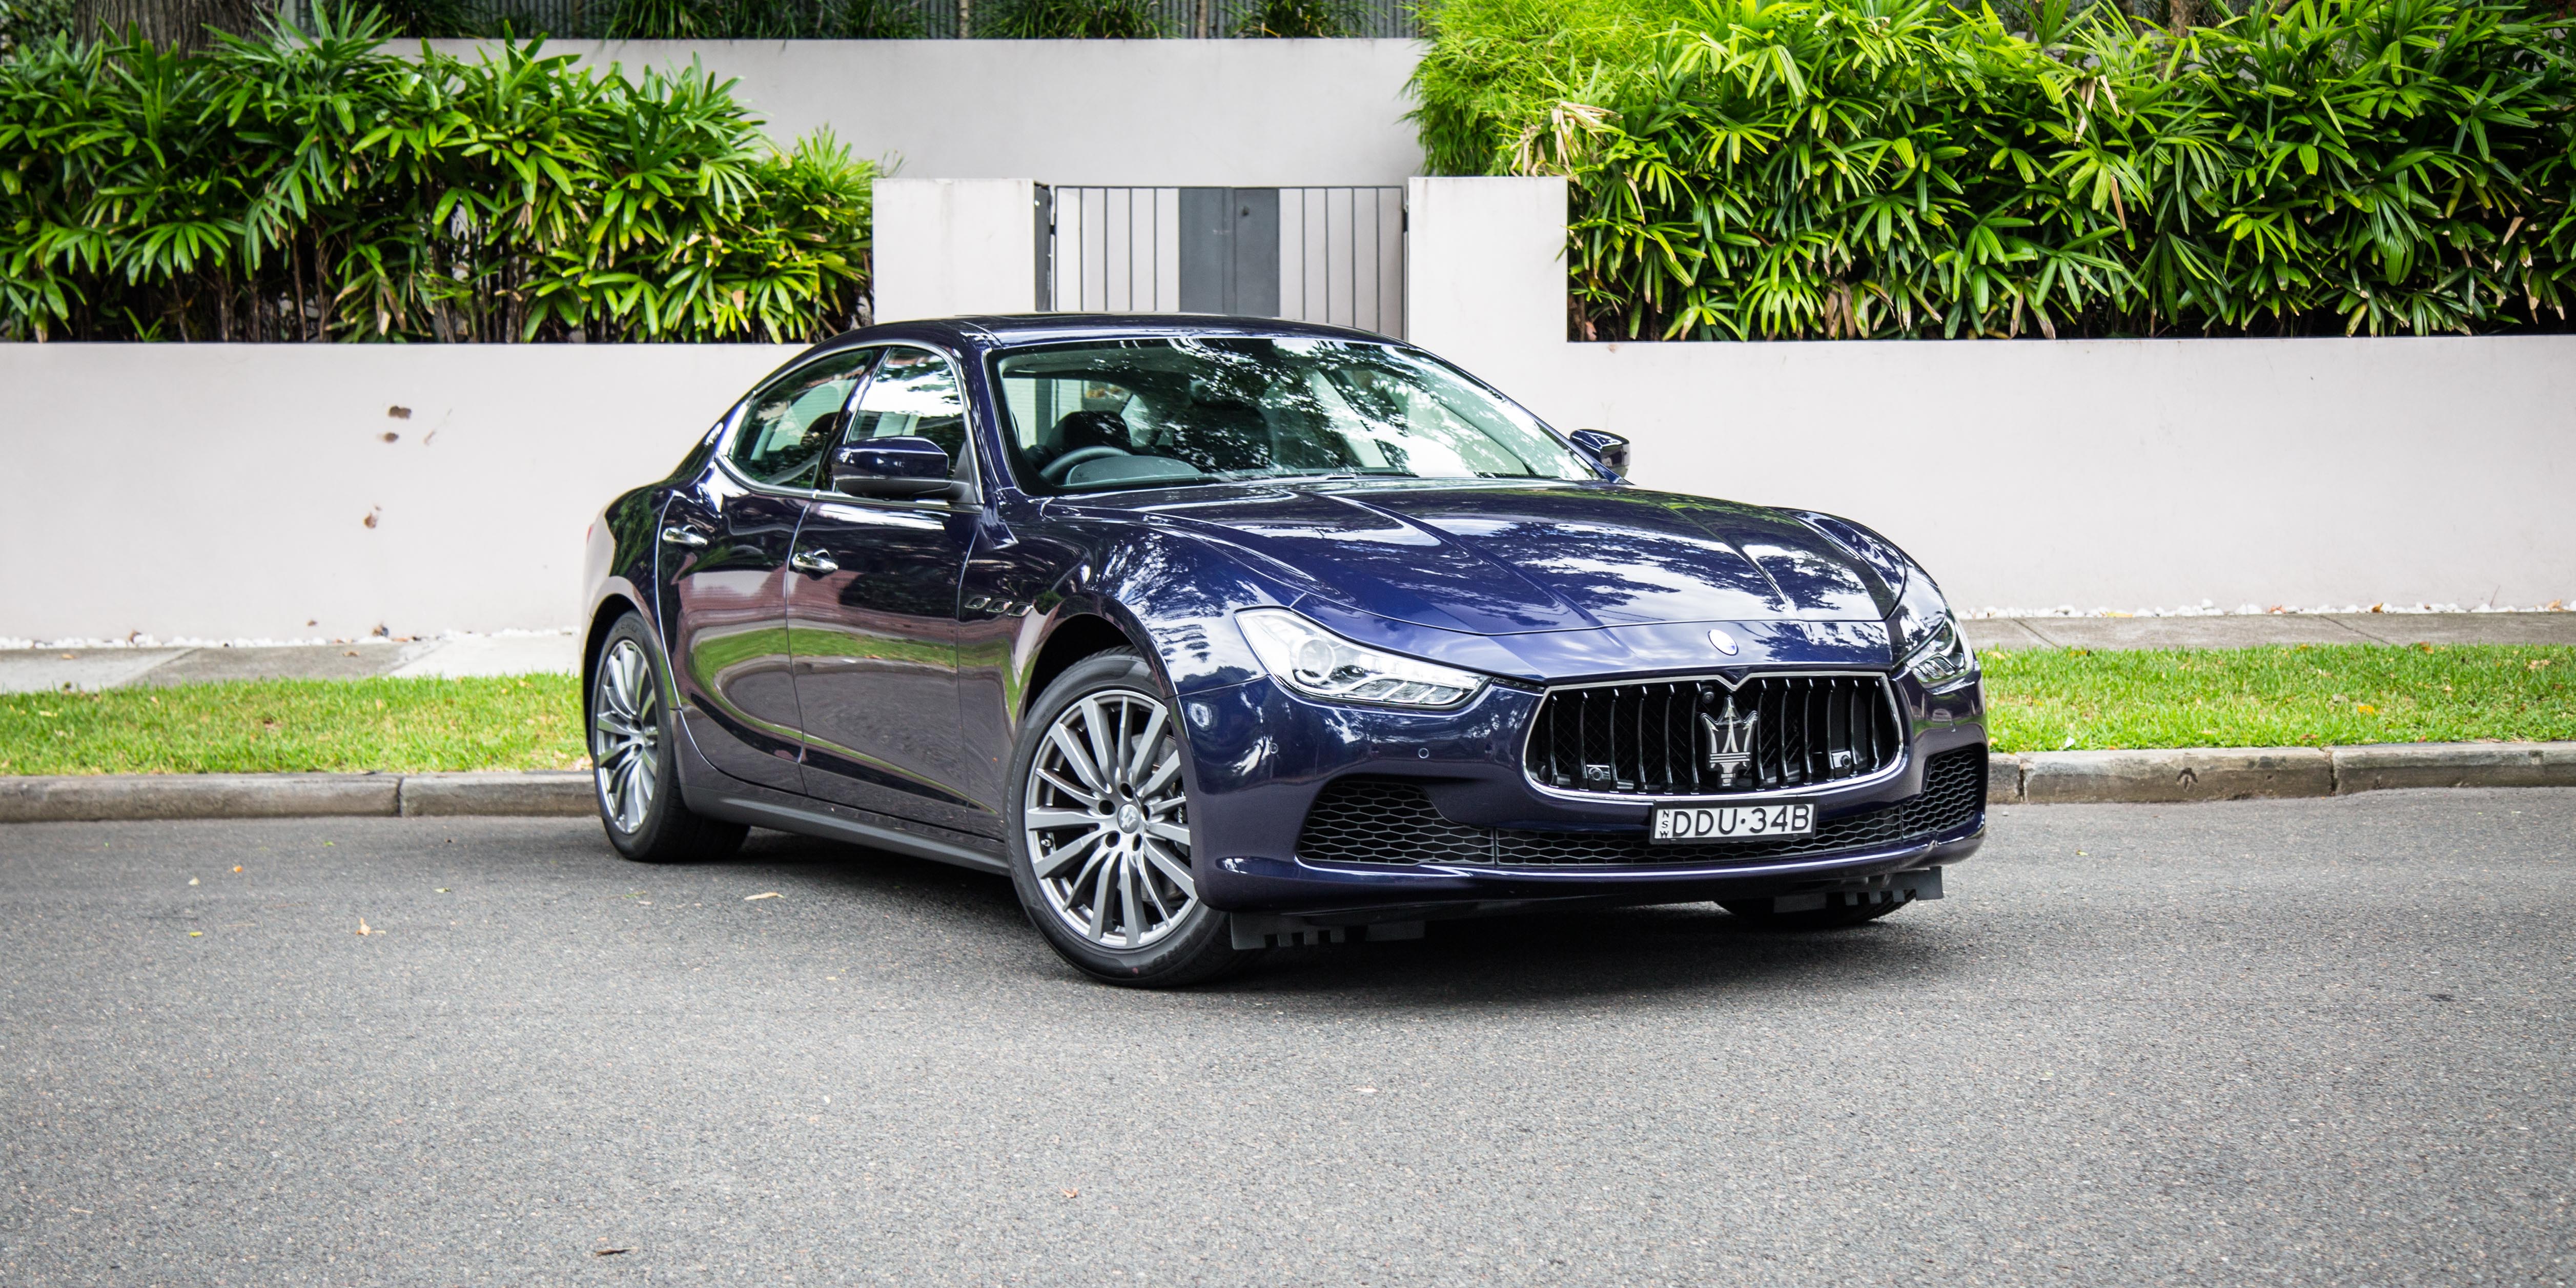 Maserati Ghibli exterior big